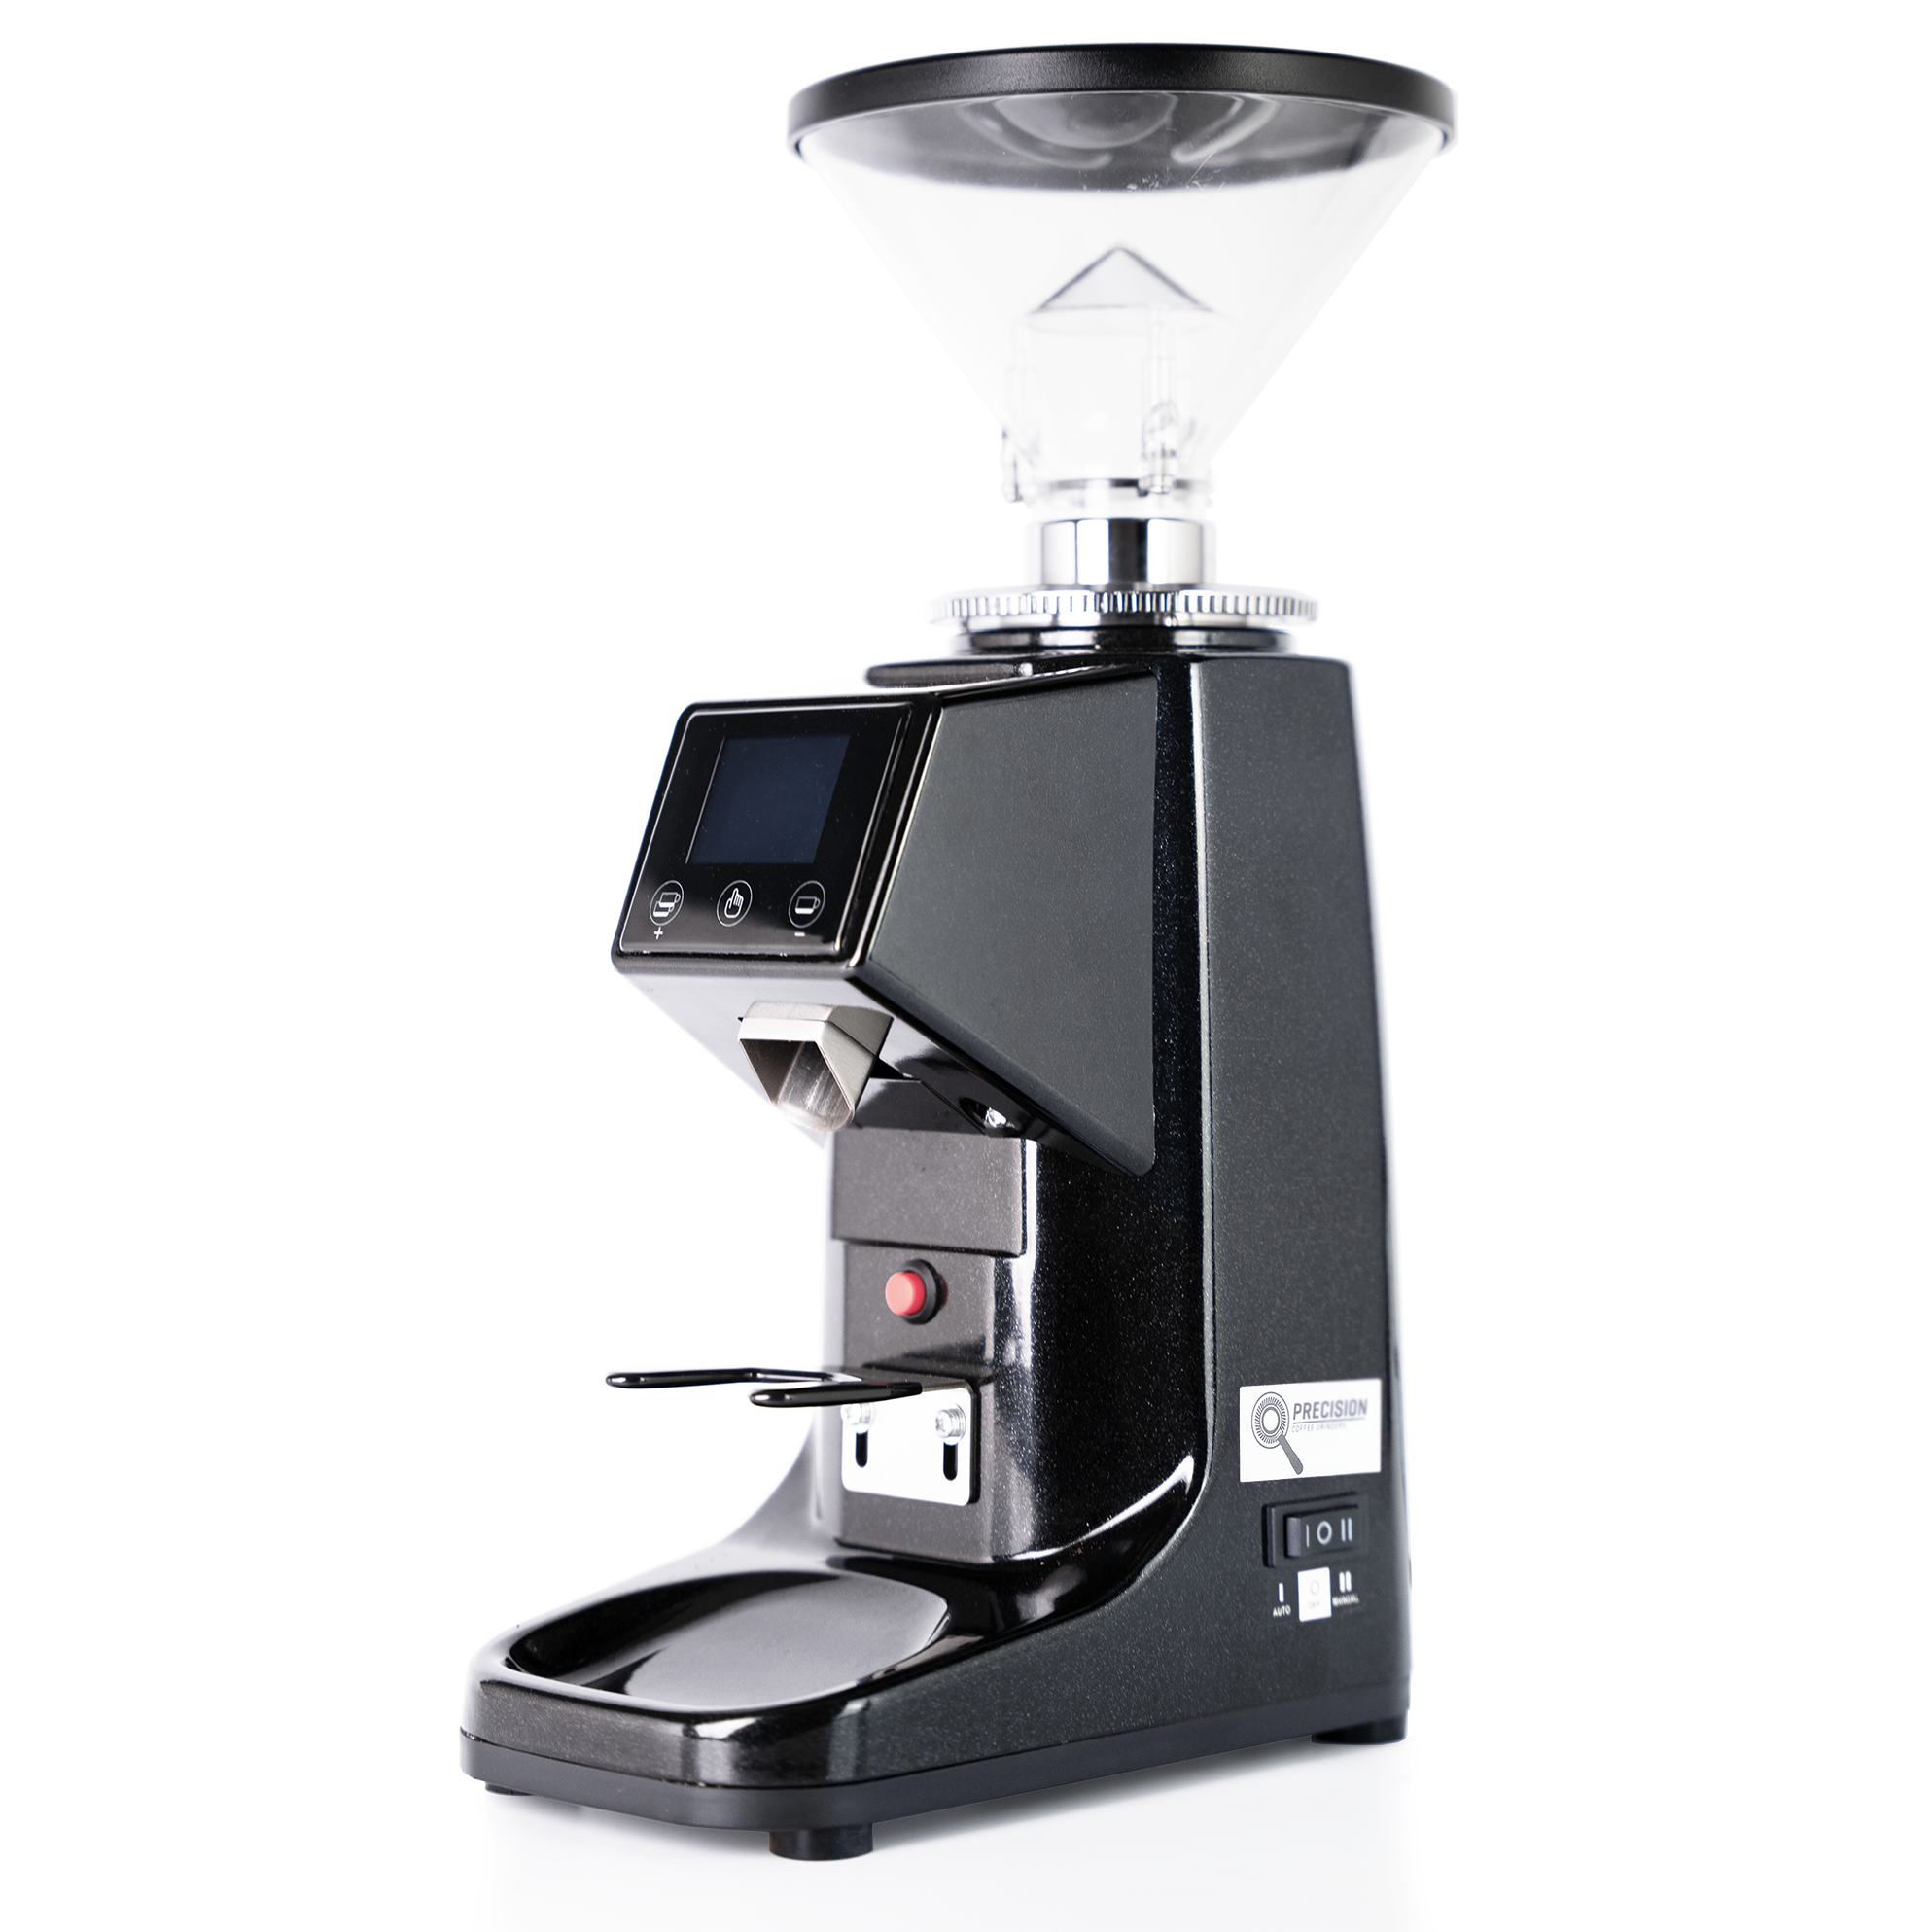 Precision GS7 Coffee Grinder